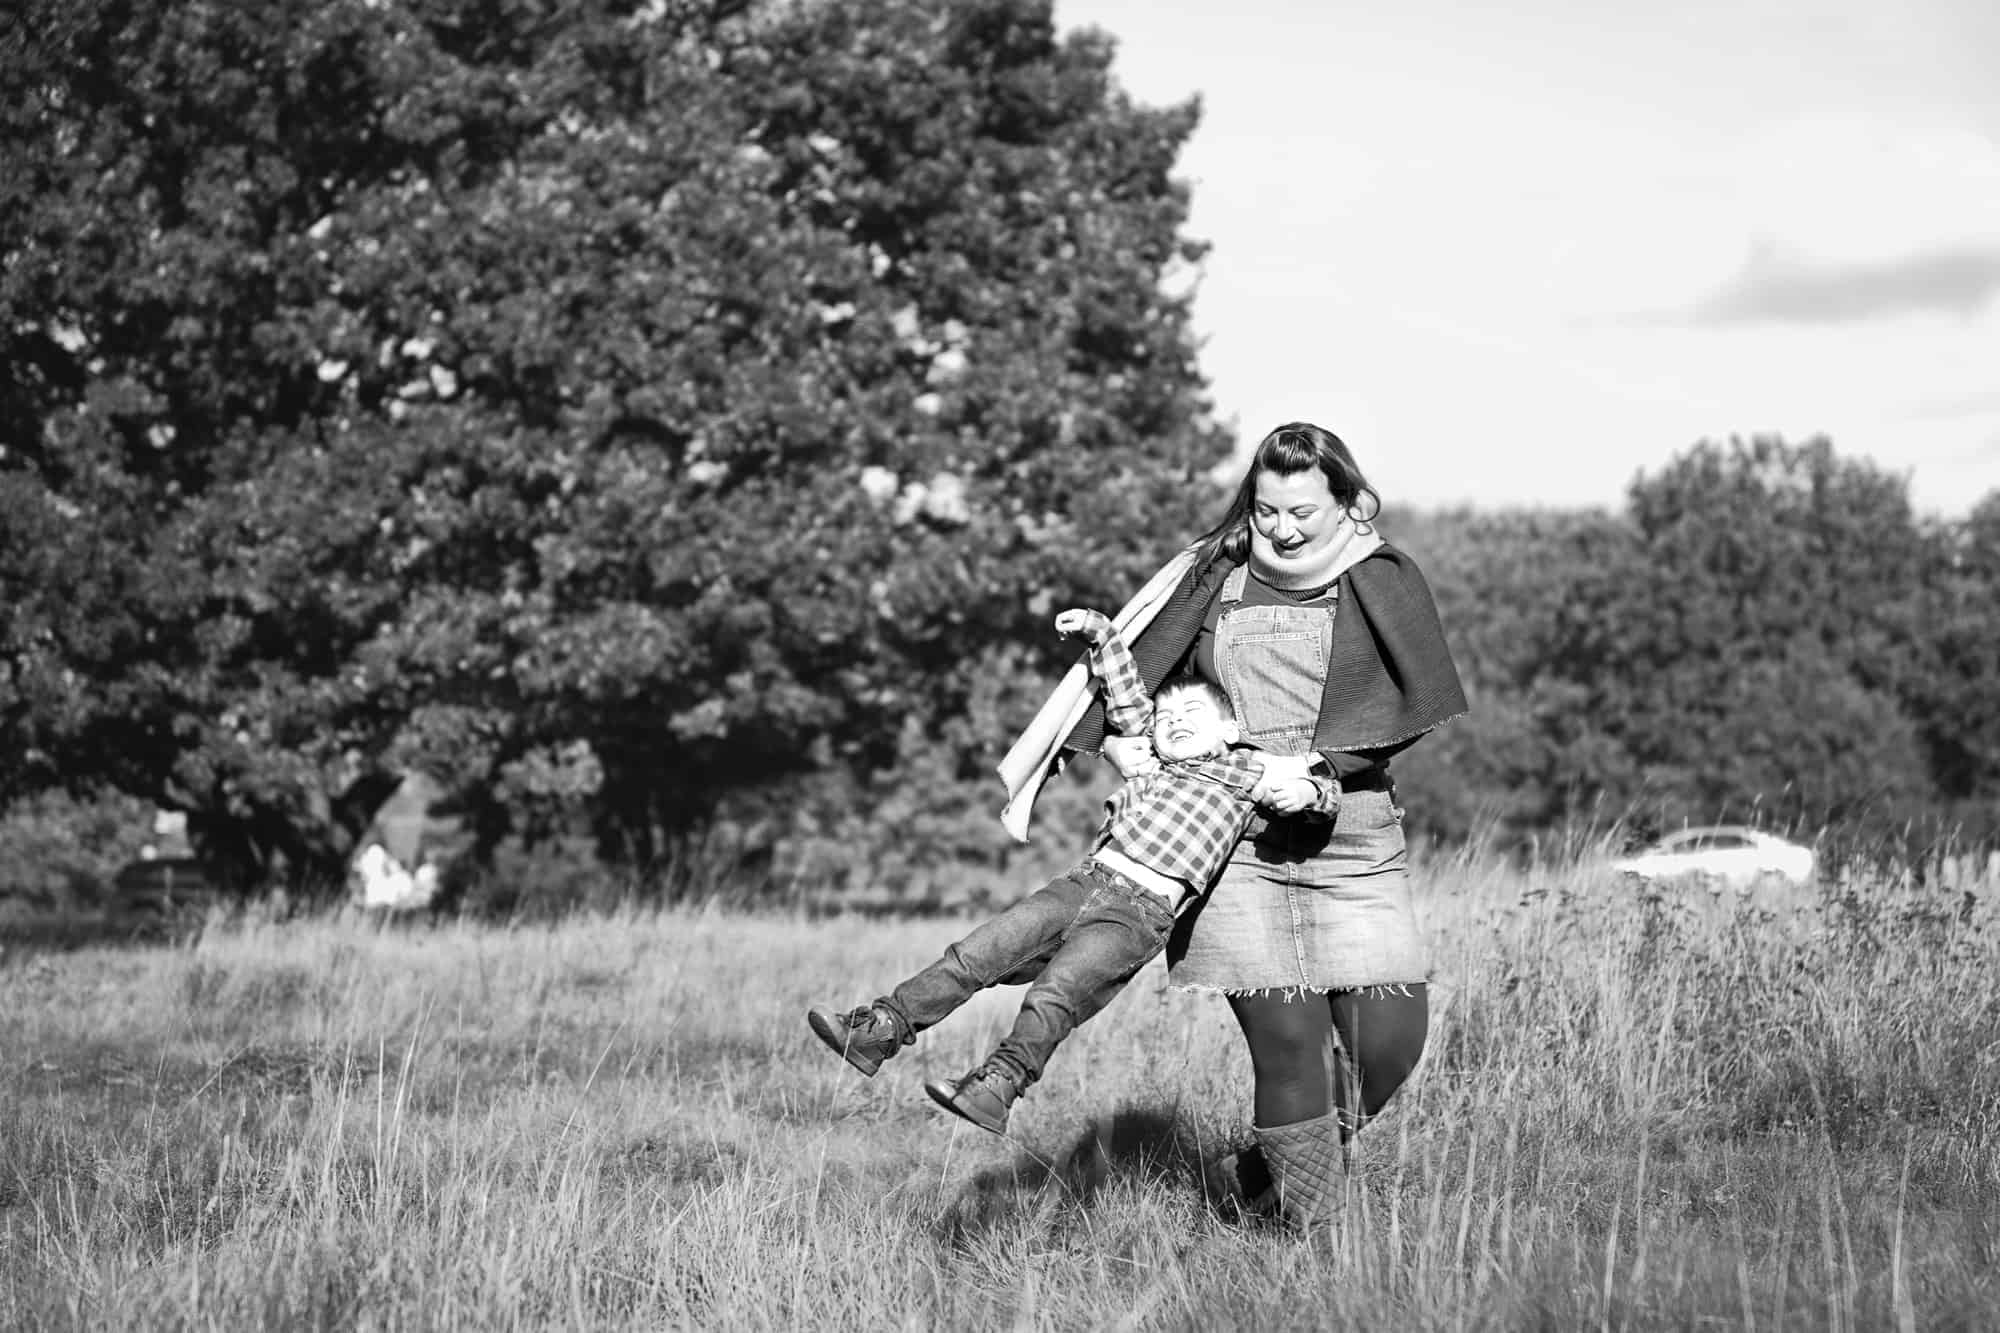 Family photographer from Orpington capturing a family's autumn fun